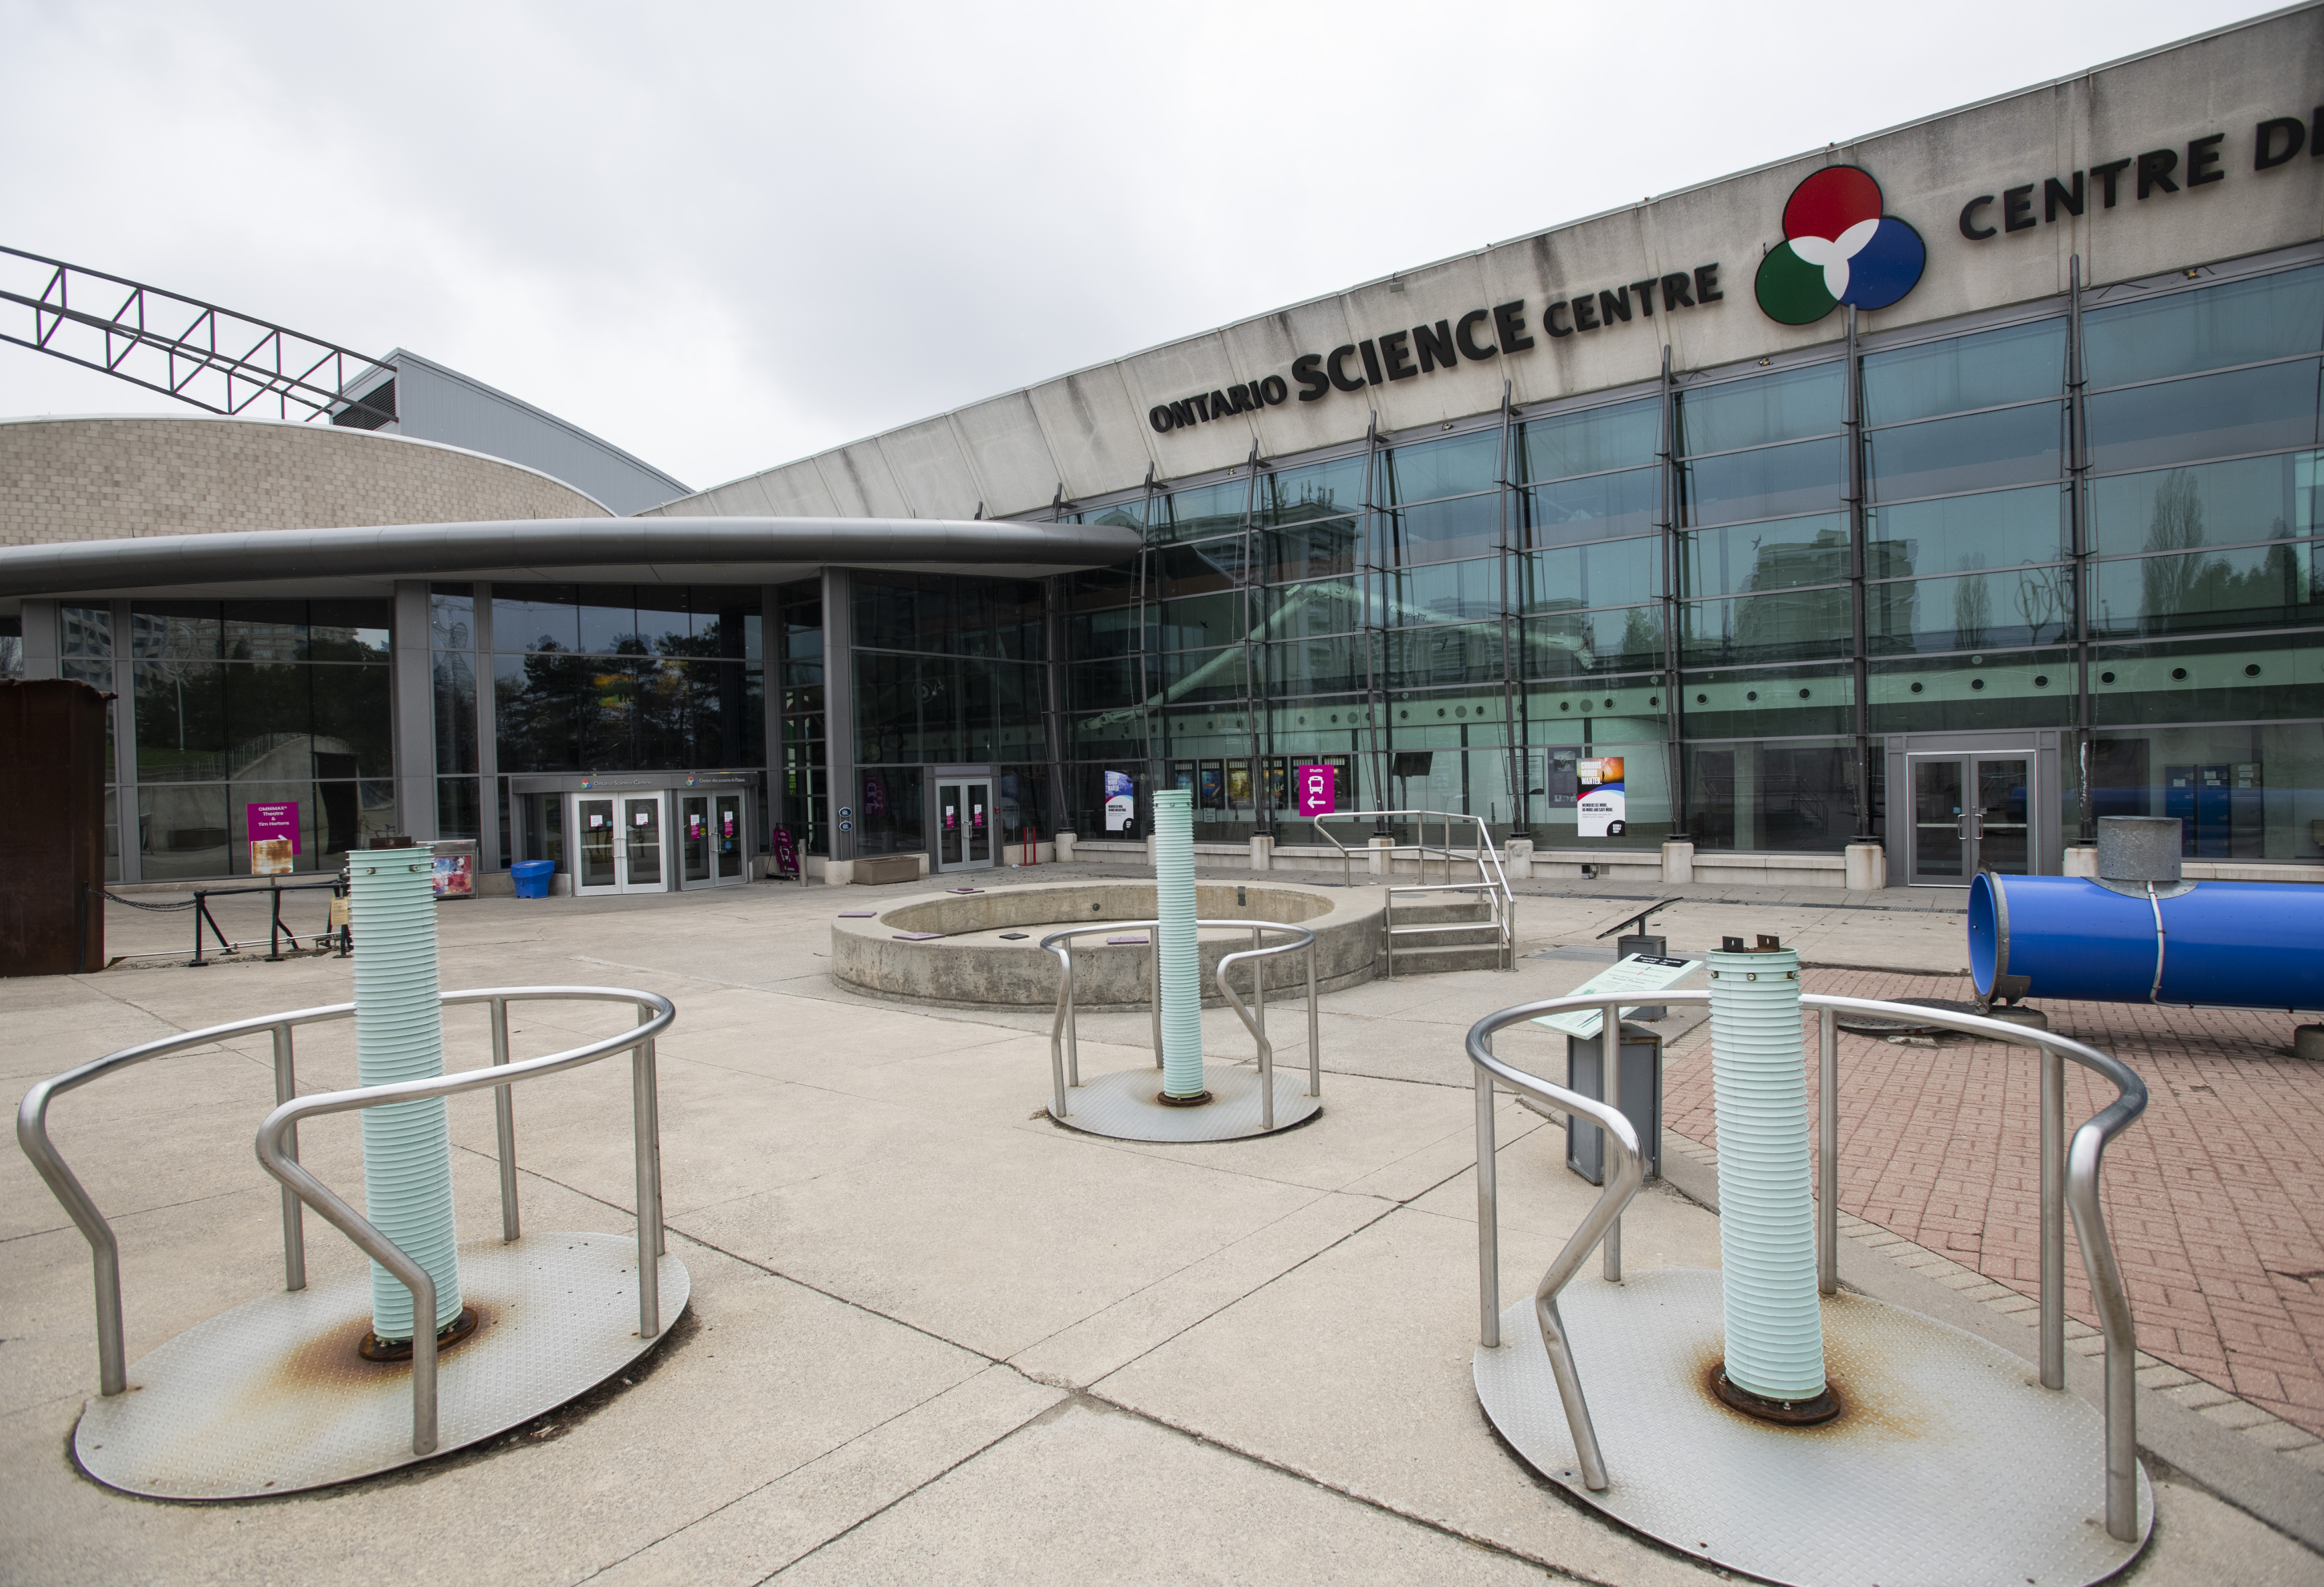 Ontario Science Centre Entrance Fee